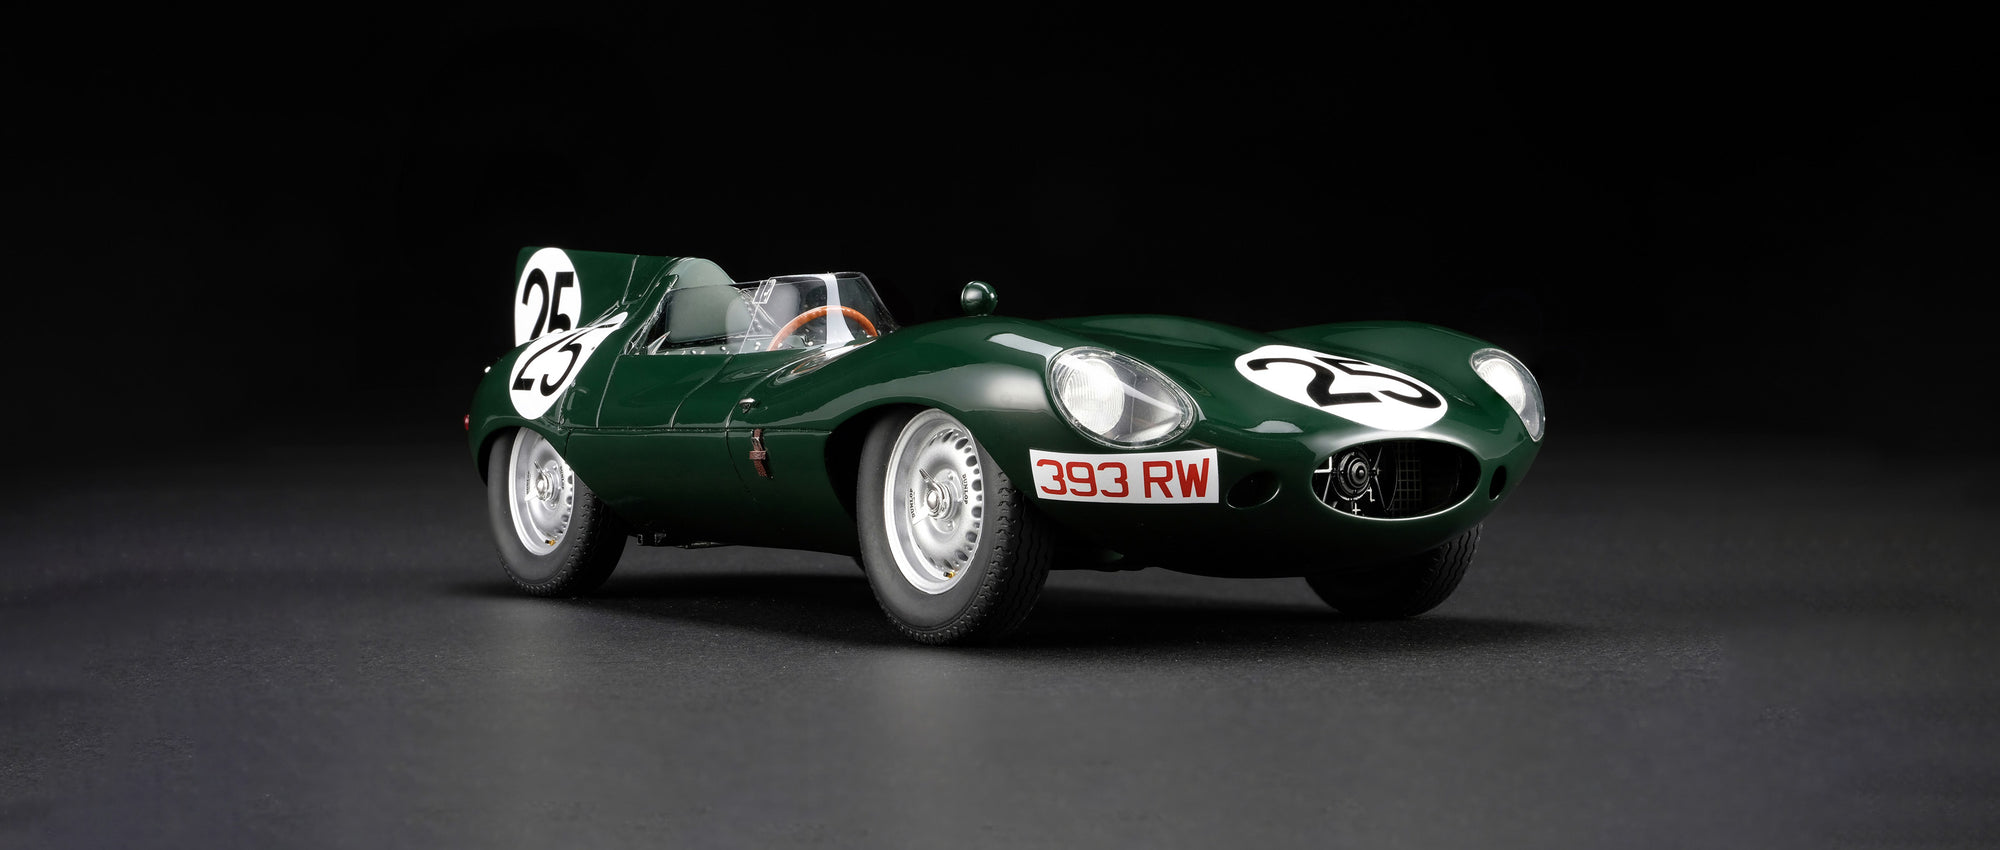 Jaguar D-type - 1956 Reims Winner